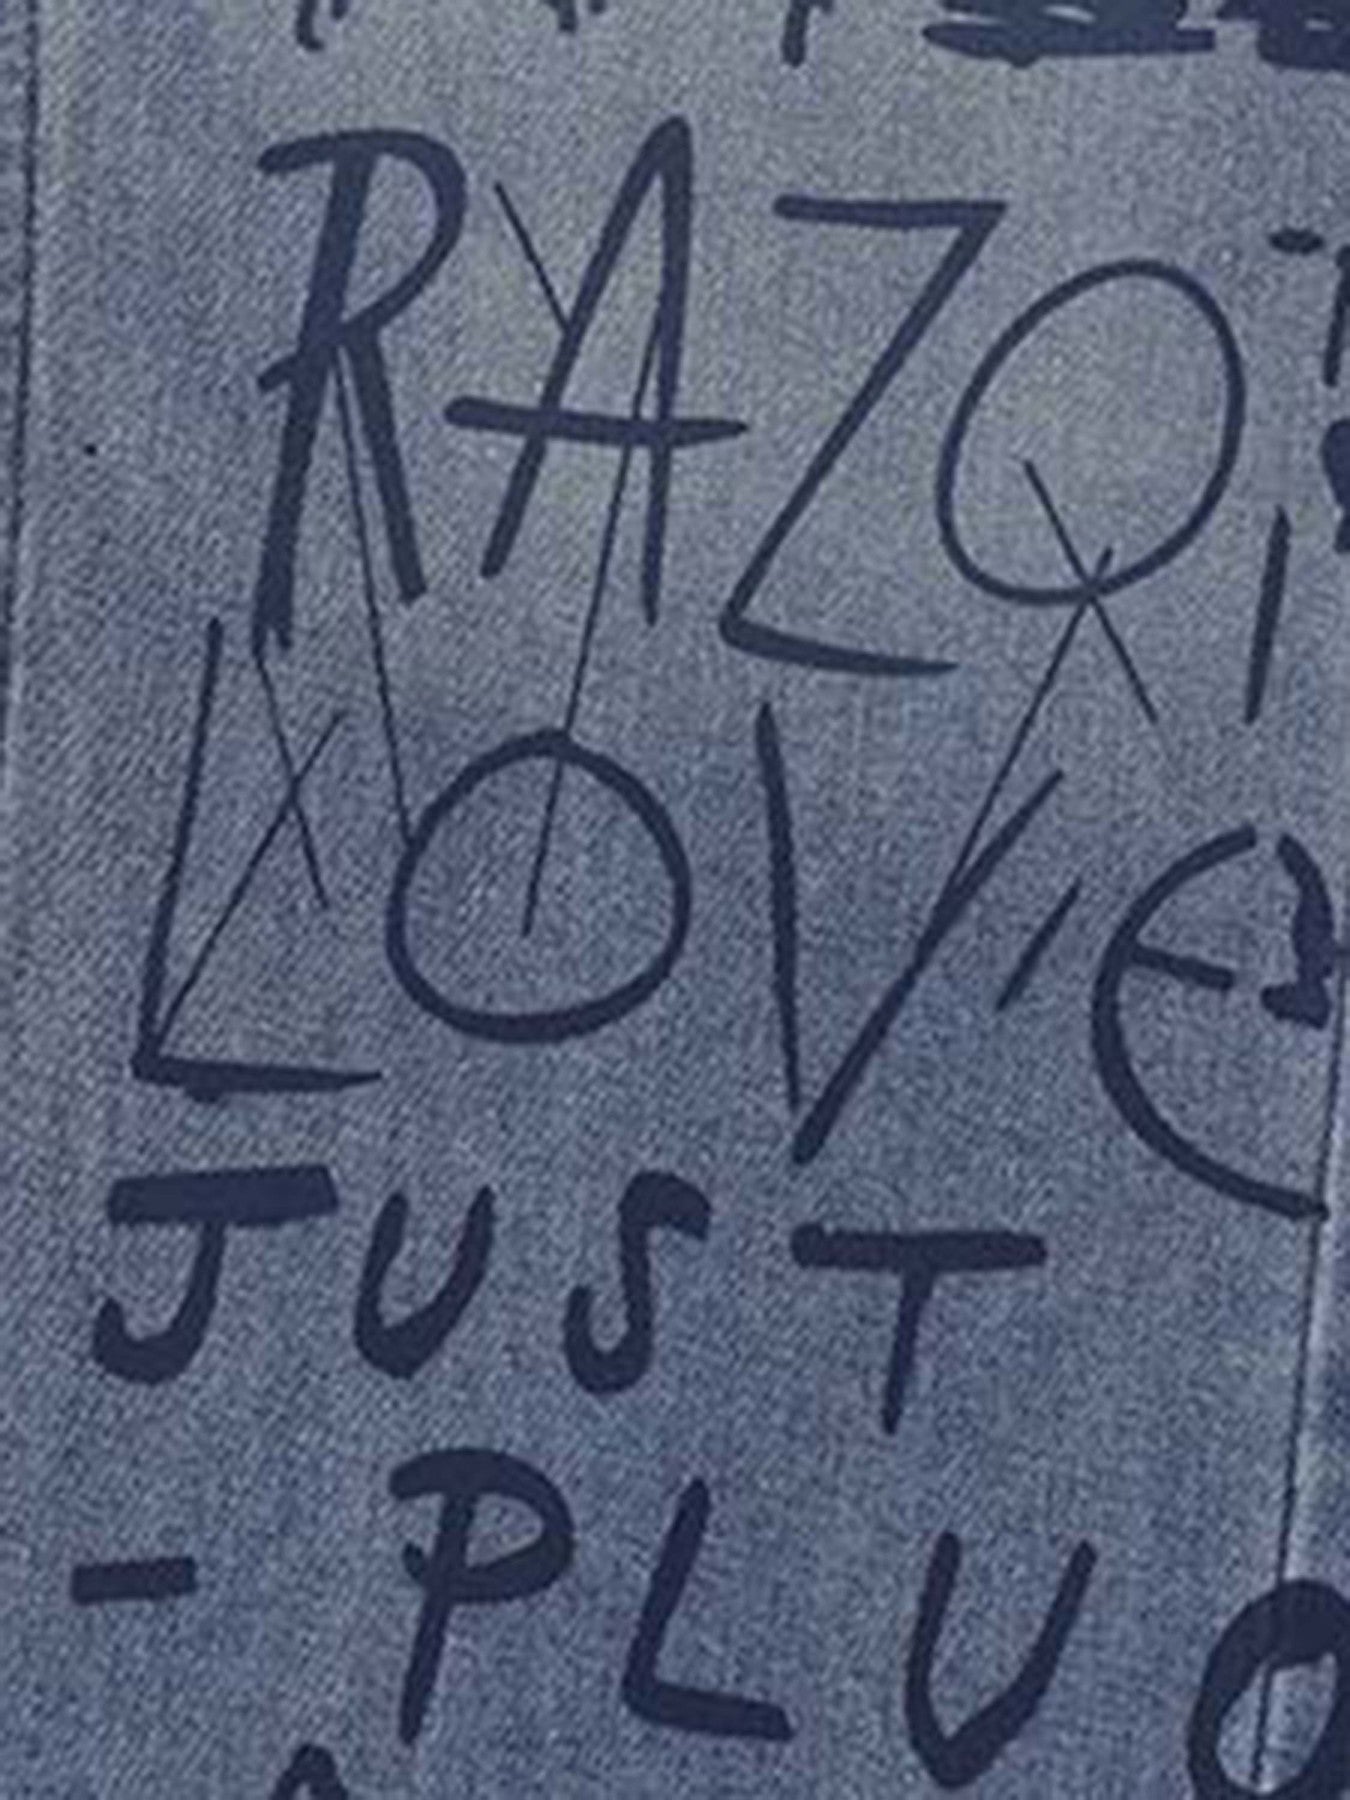 The Supermade Graffiti Letter Jeans